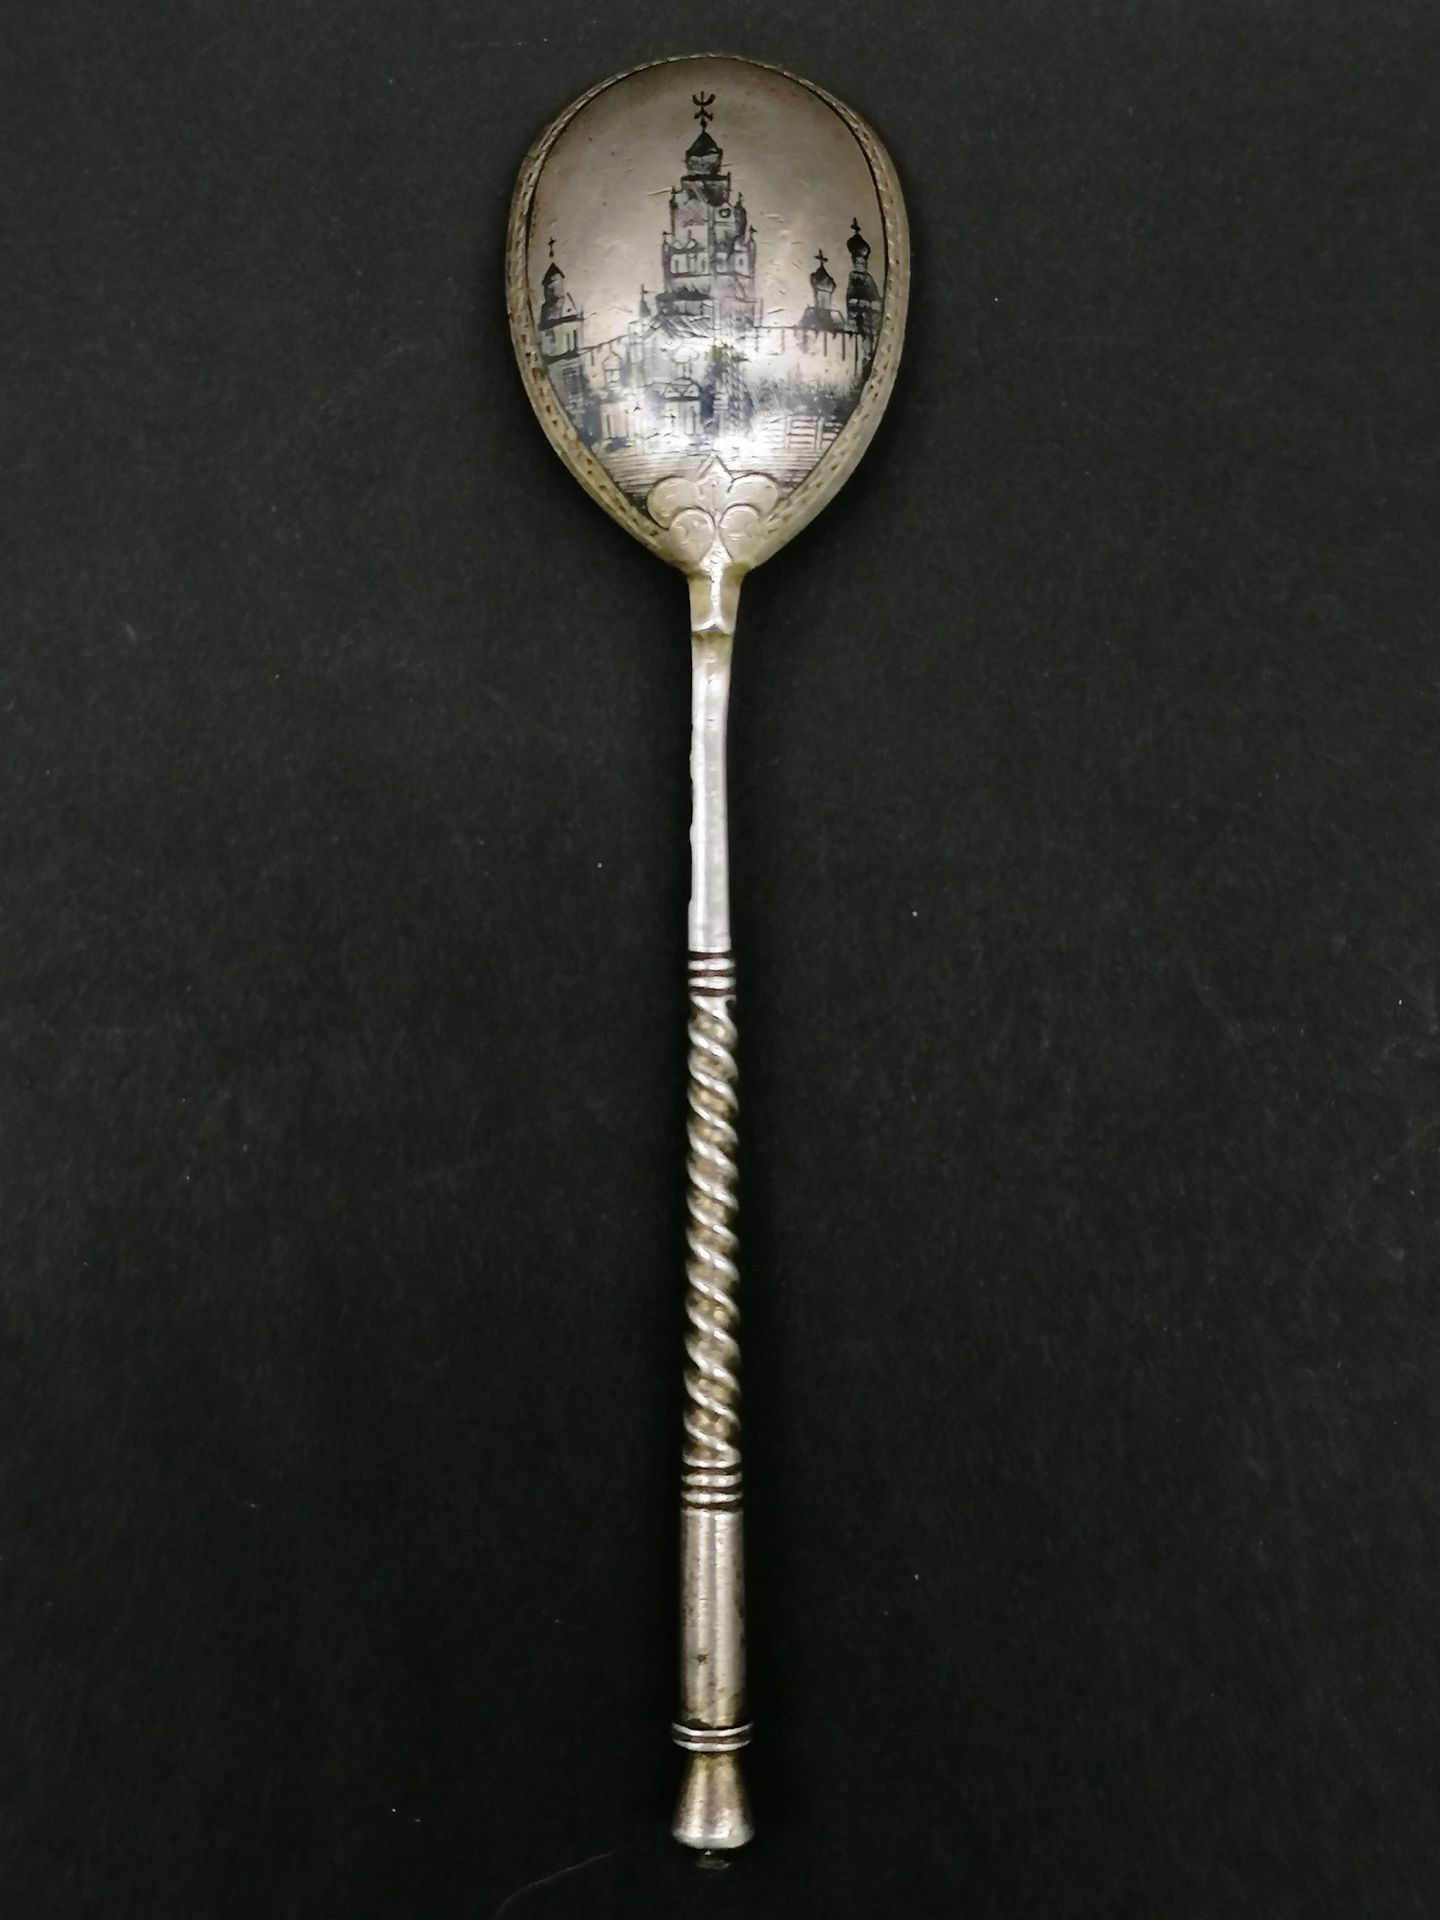 Null 卡瓦列斯的勺子

俄罗斯银制扭曲手柄

带有正统教堂装饰的勺子

包括 "1894"、"84 "和骑手在内的几个印记

高16,5厘米

PN。38 &hellip;